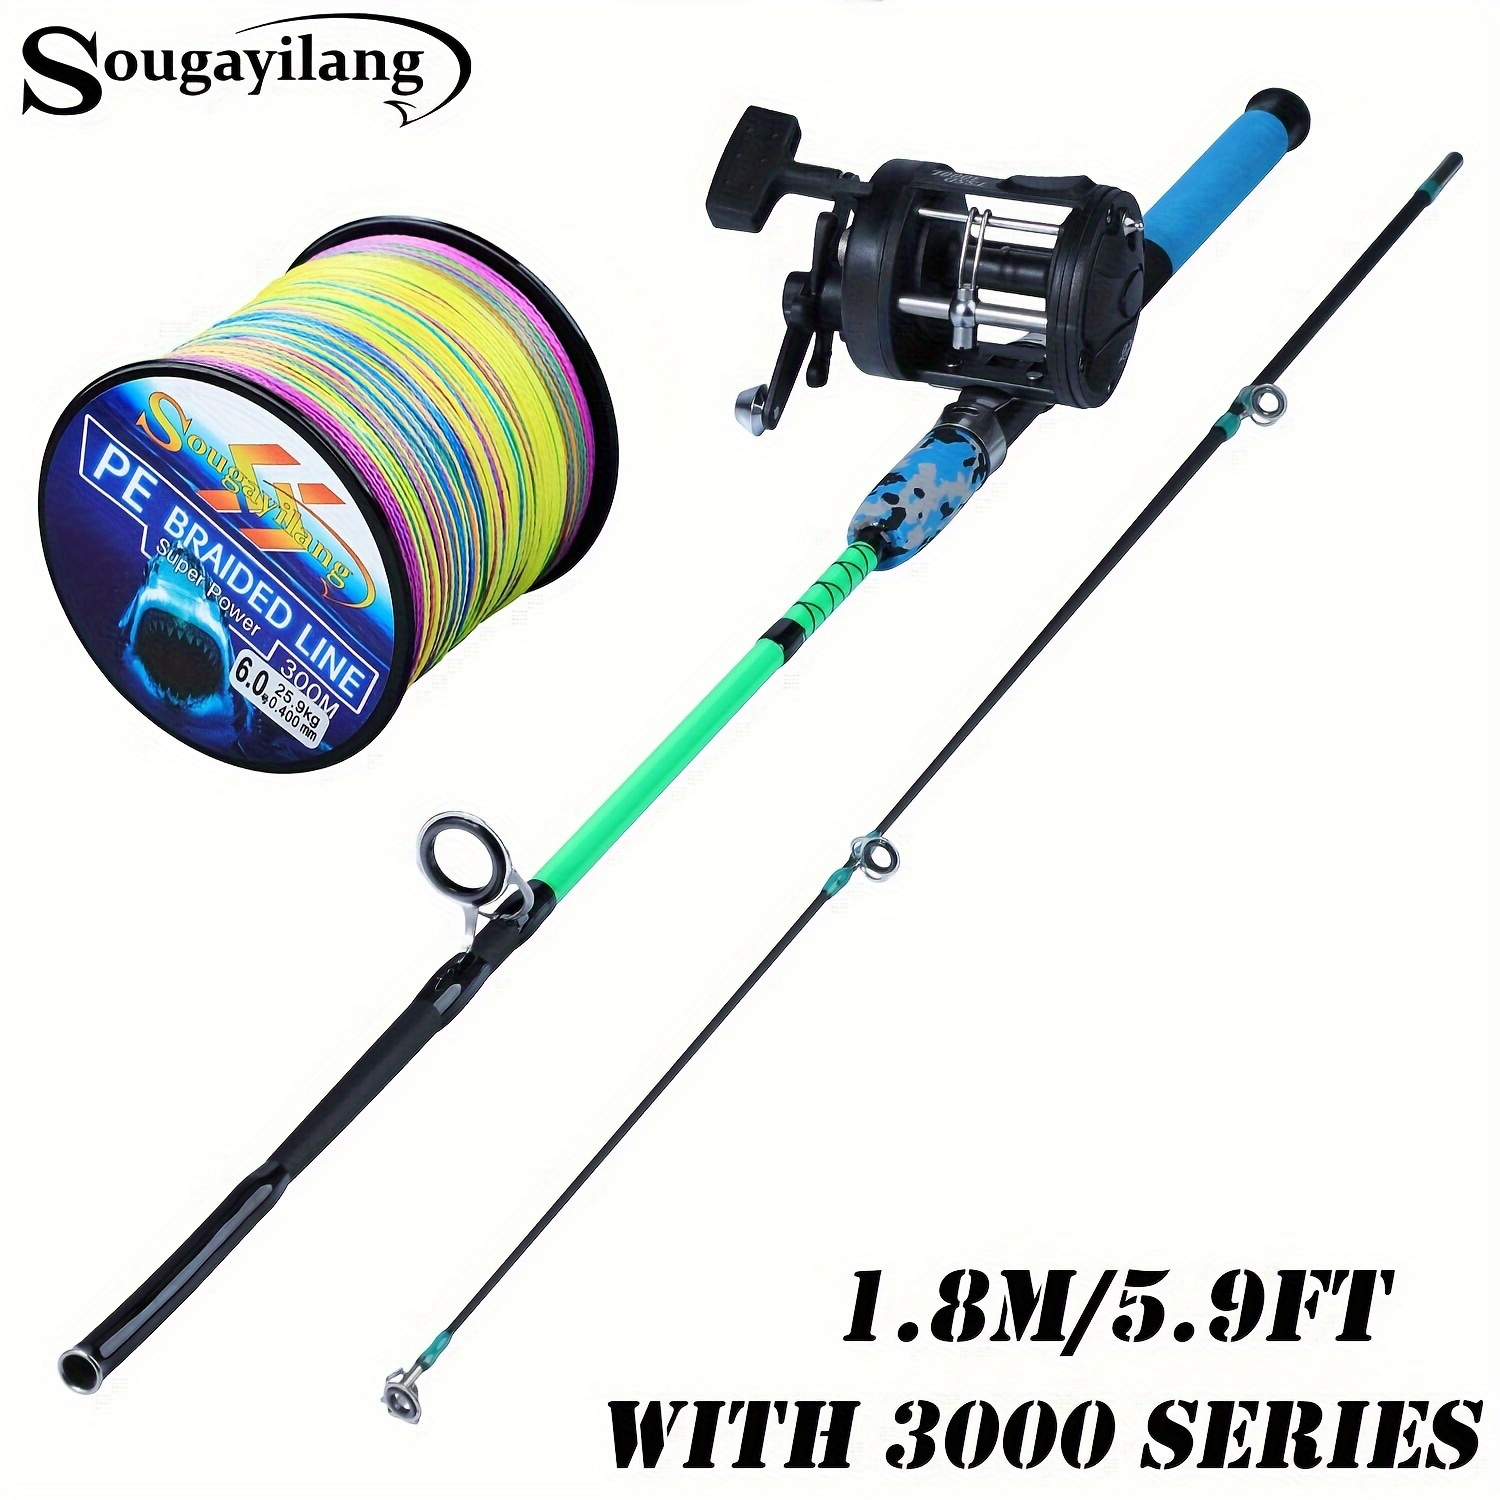 Sougayilang Fishing Rod and Reel Combo, Medium Fishing Pole with